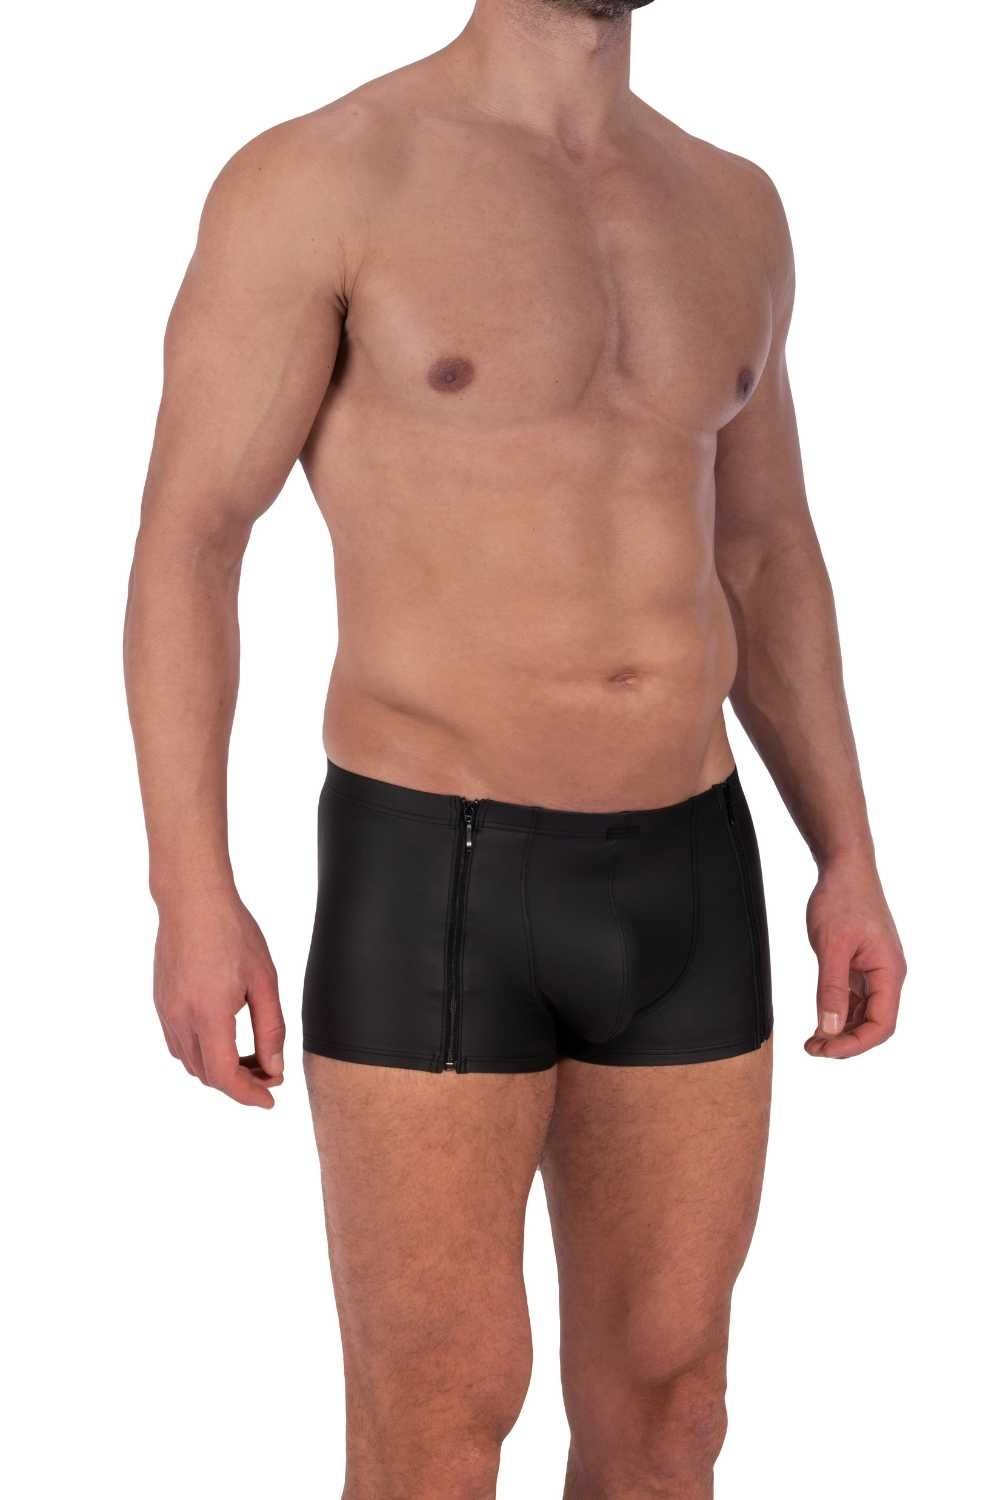 Manstore MANSTORE Boxer M2326 black Pants, Zipped